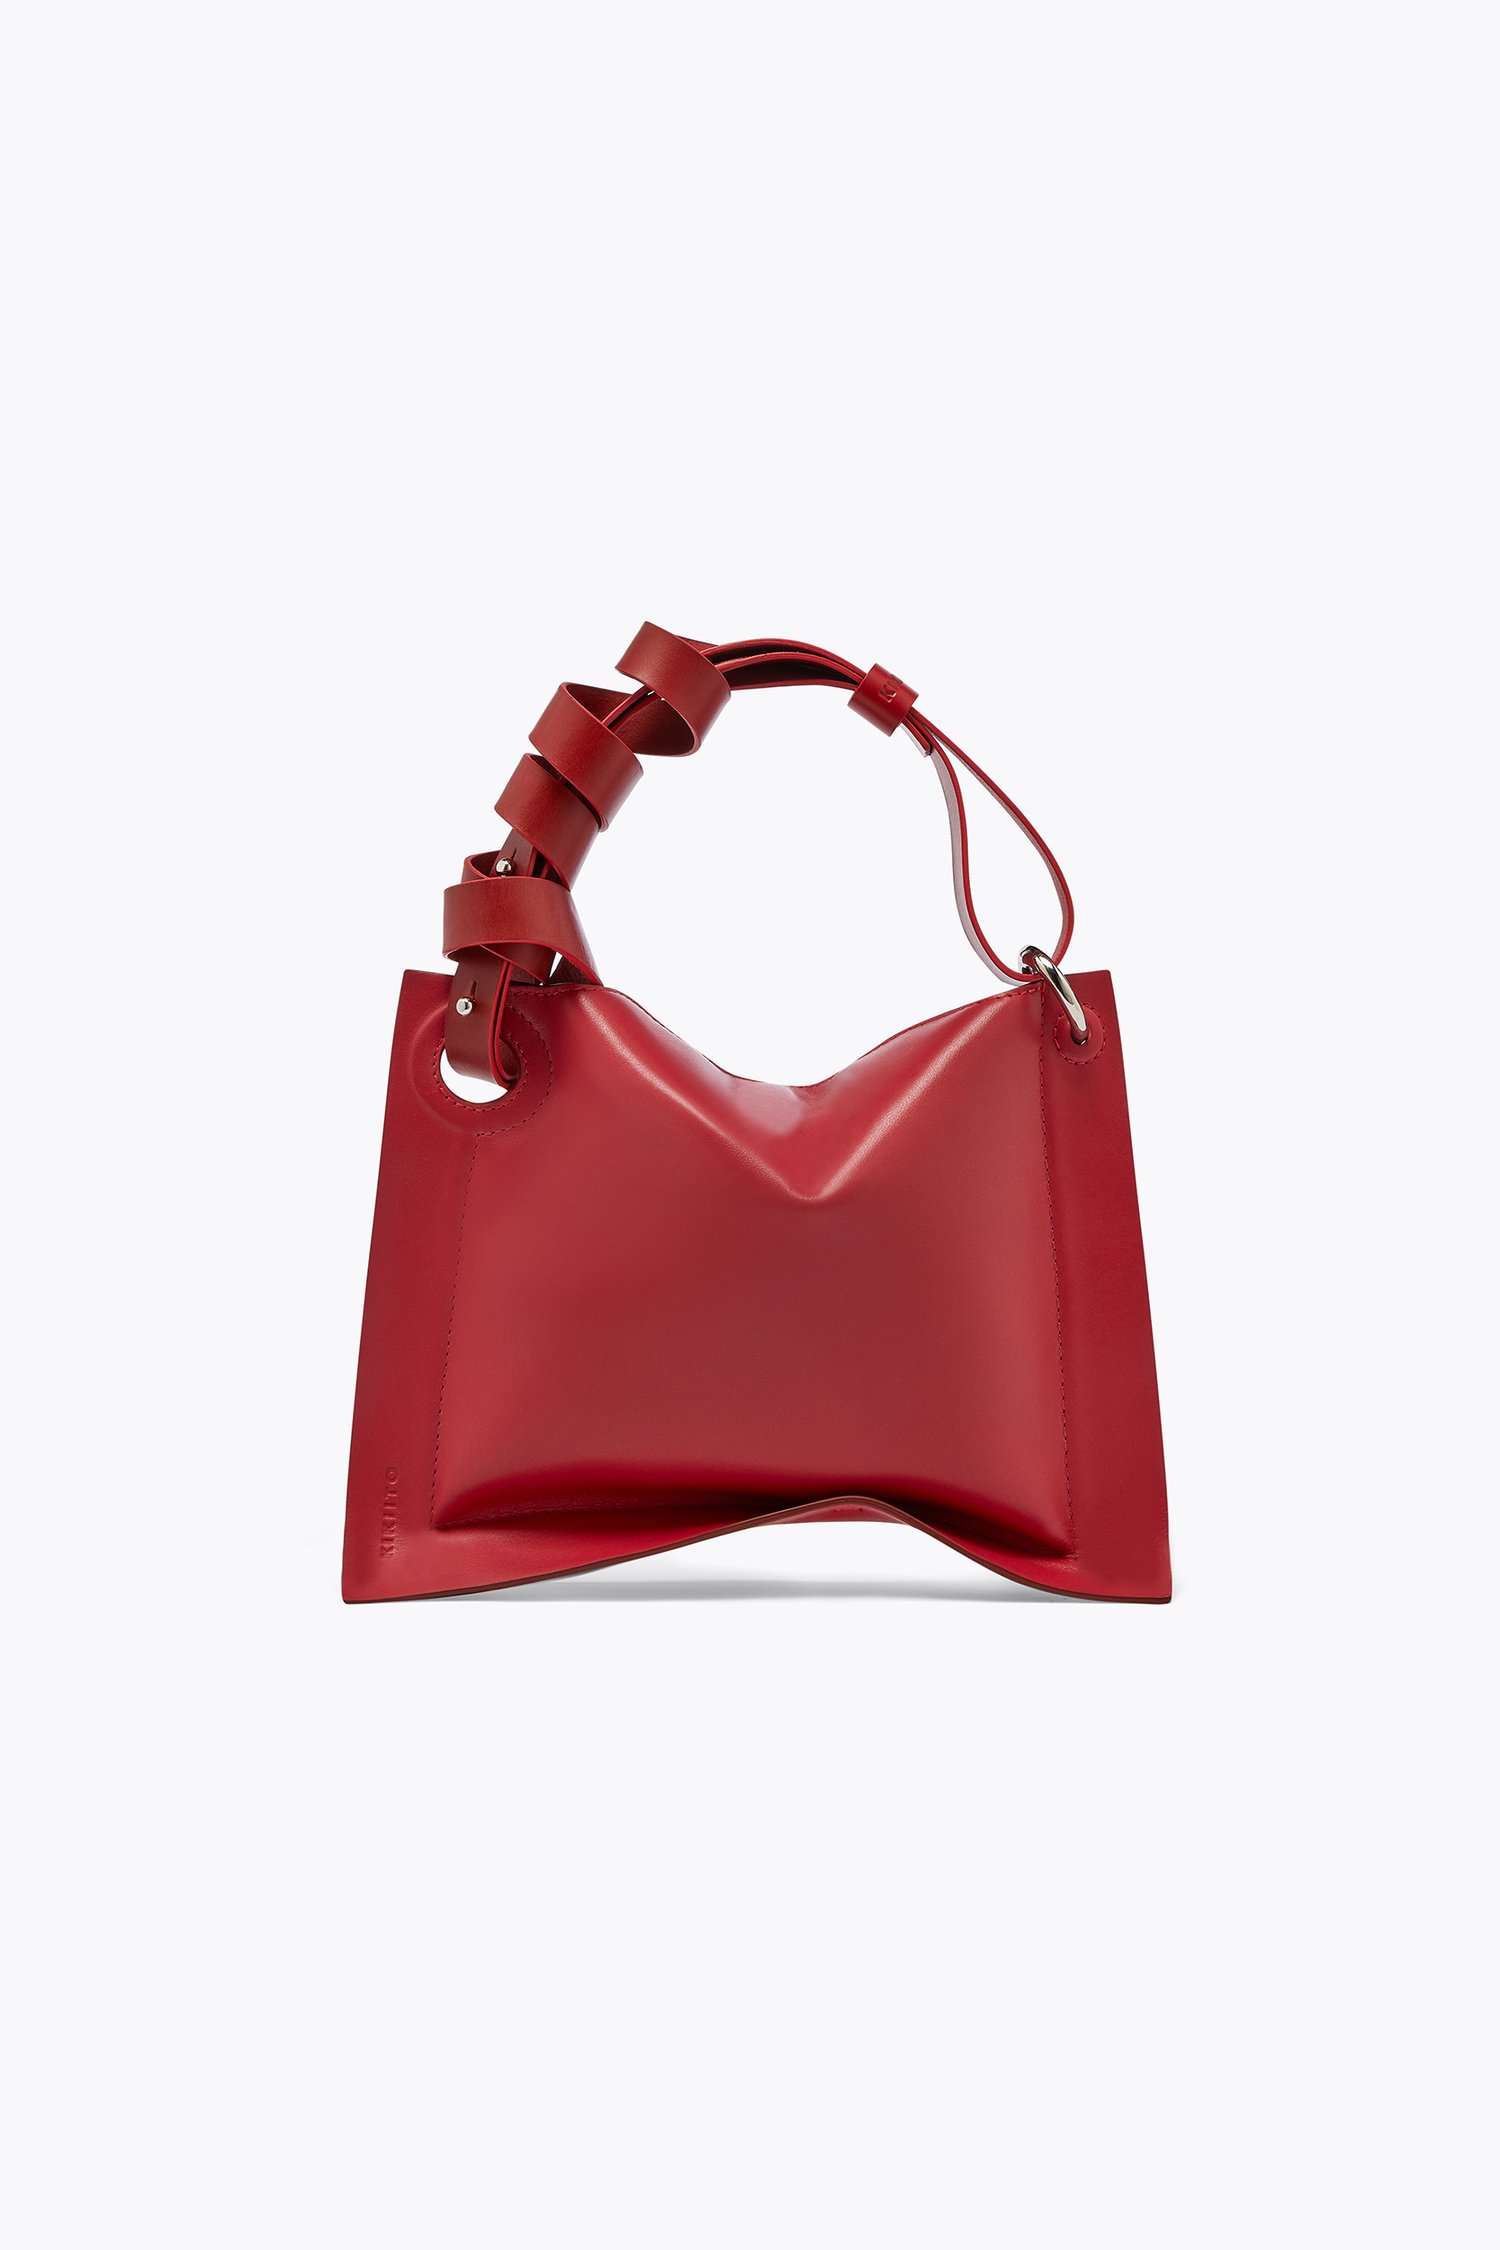 UMI SMALL Handbag - Red Leather — KIKIITO